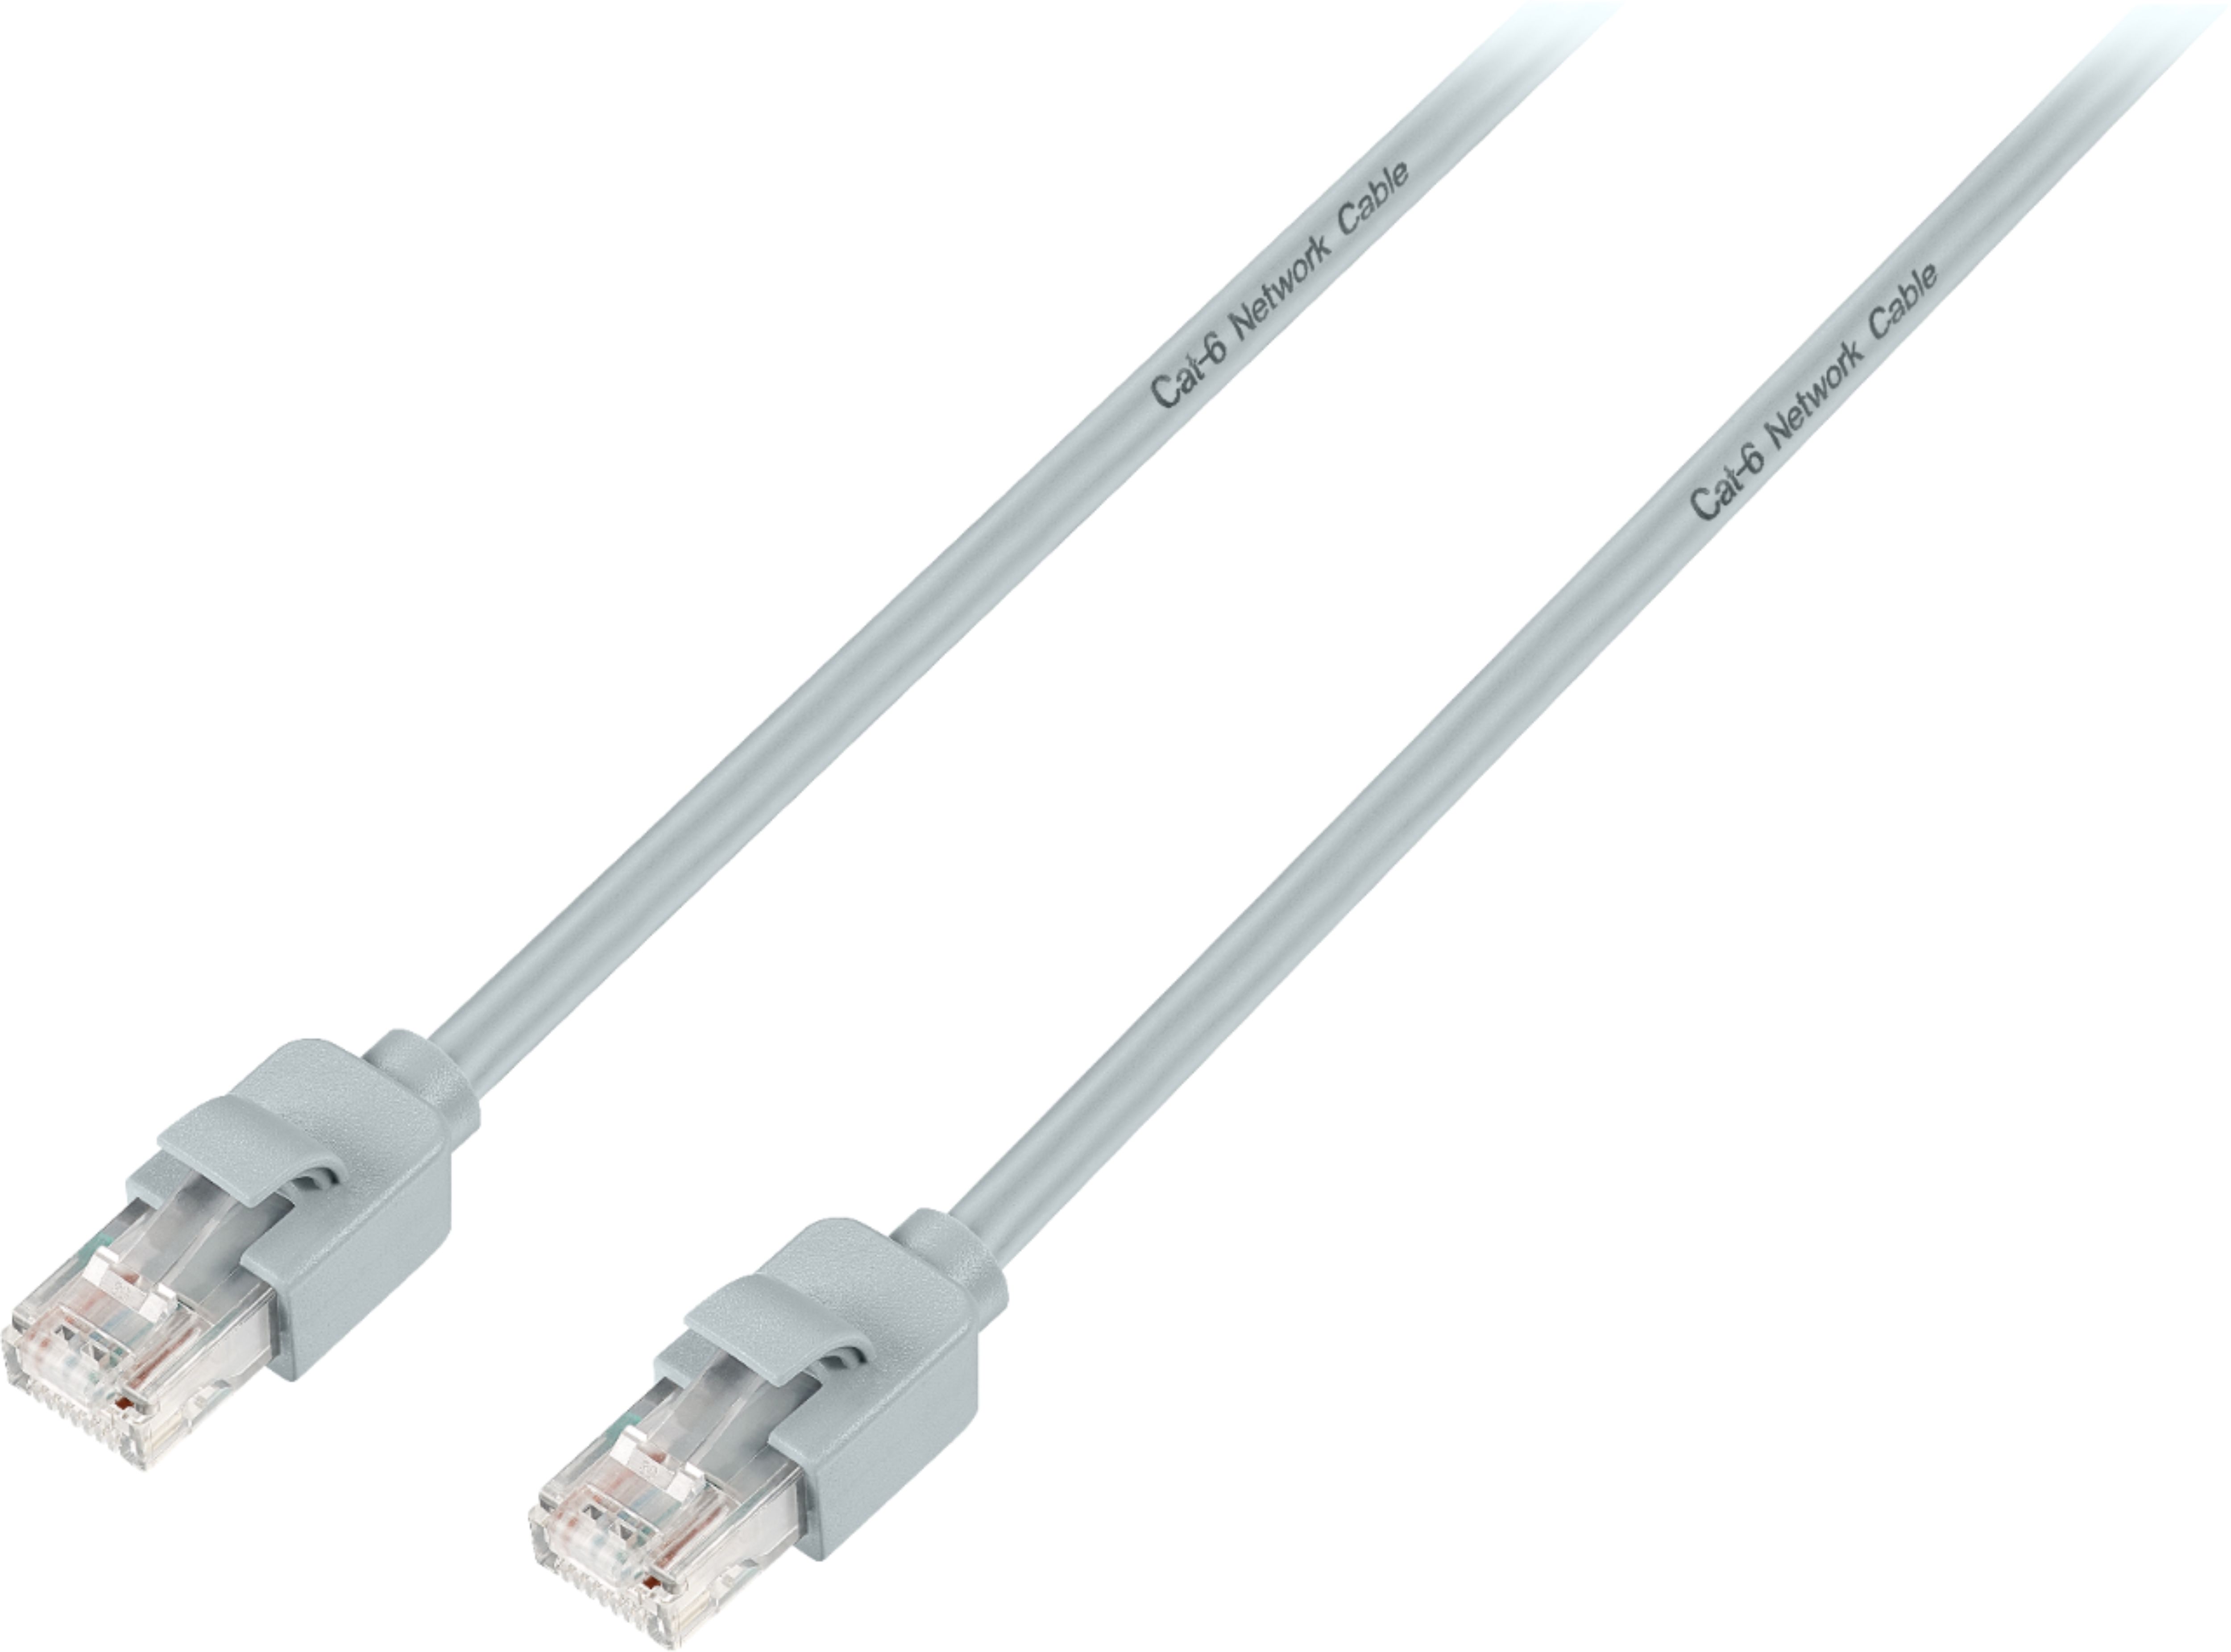 Ethernet Cable Premium RJ45 Connectors - Guaranteed top Quality